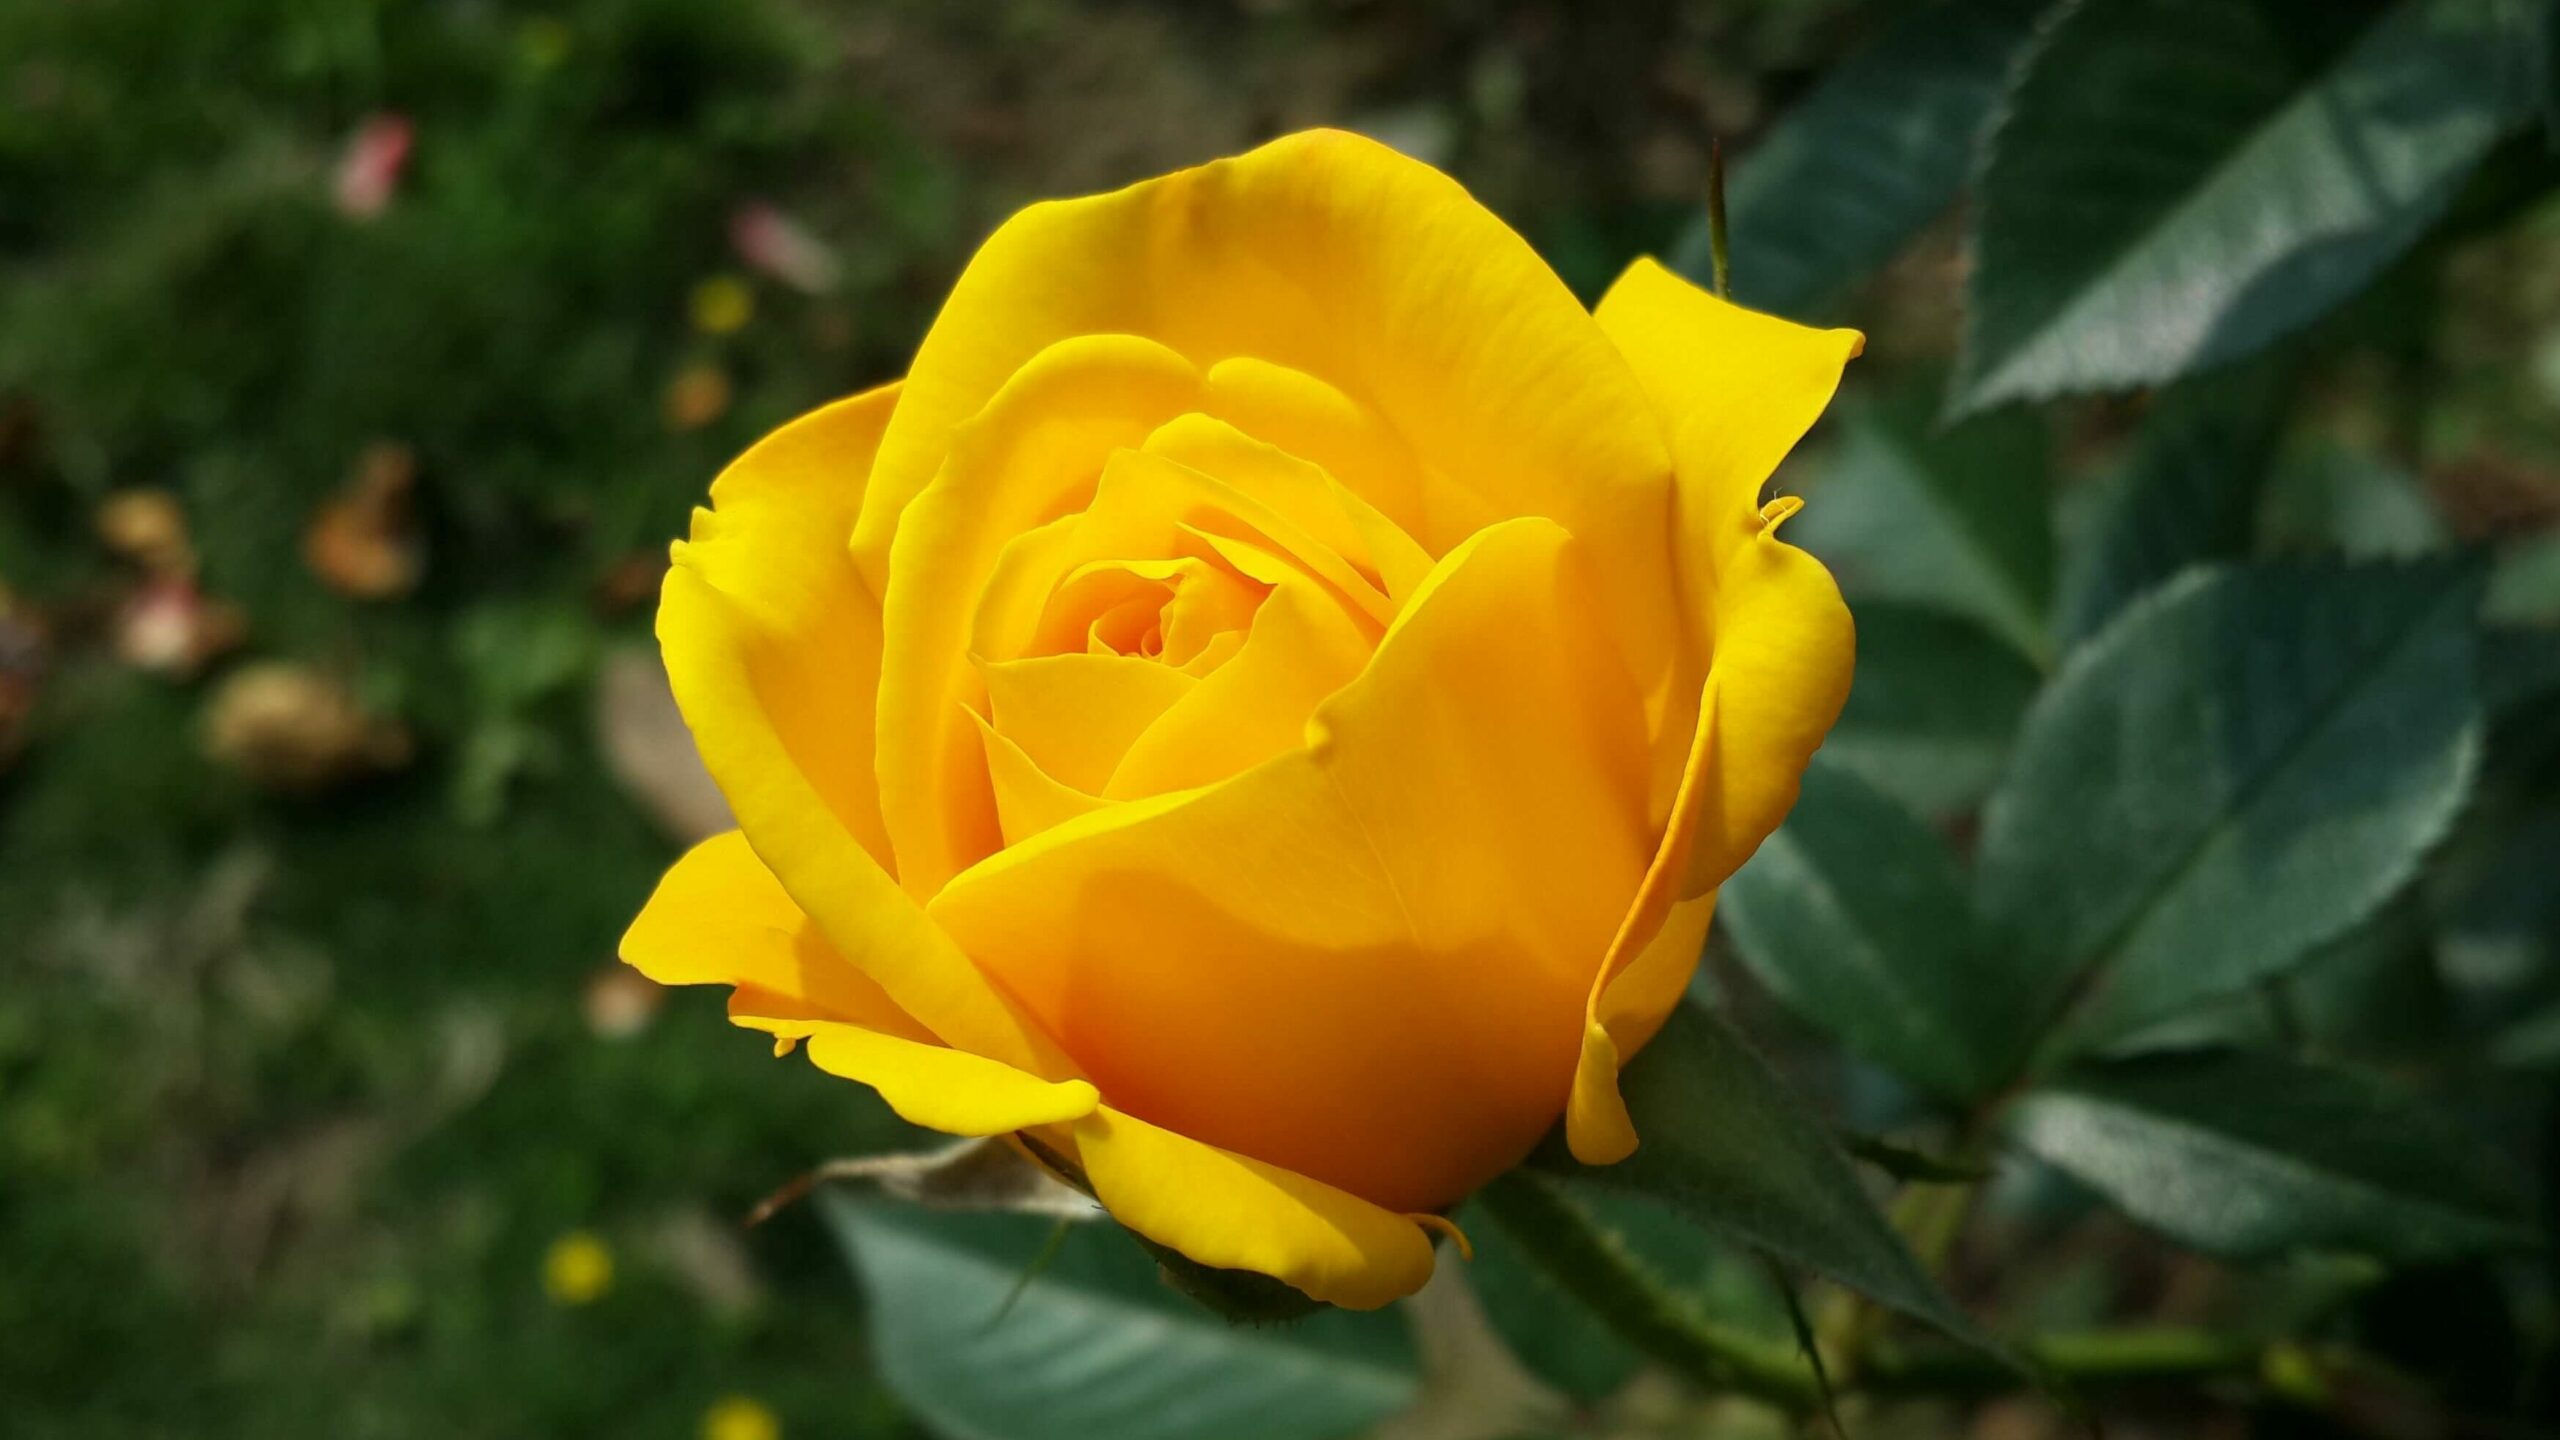 Sunny yellow rose in a garden.